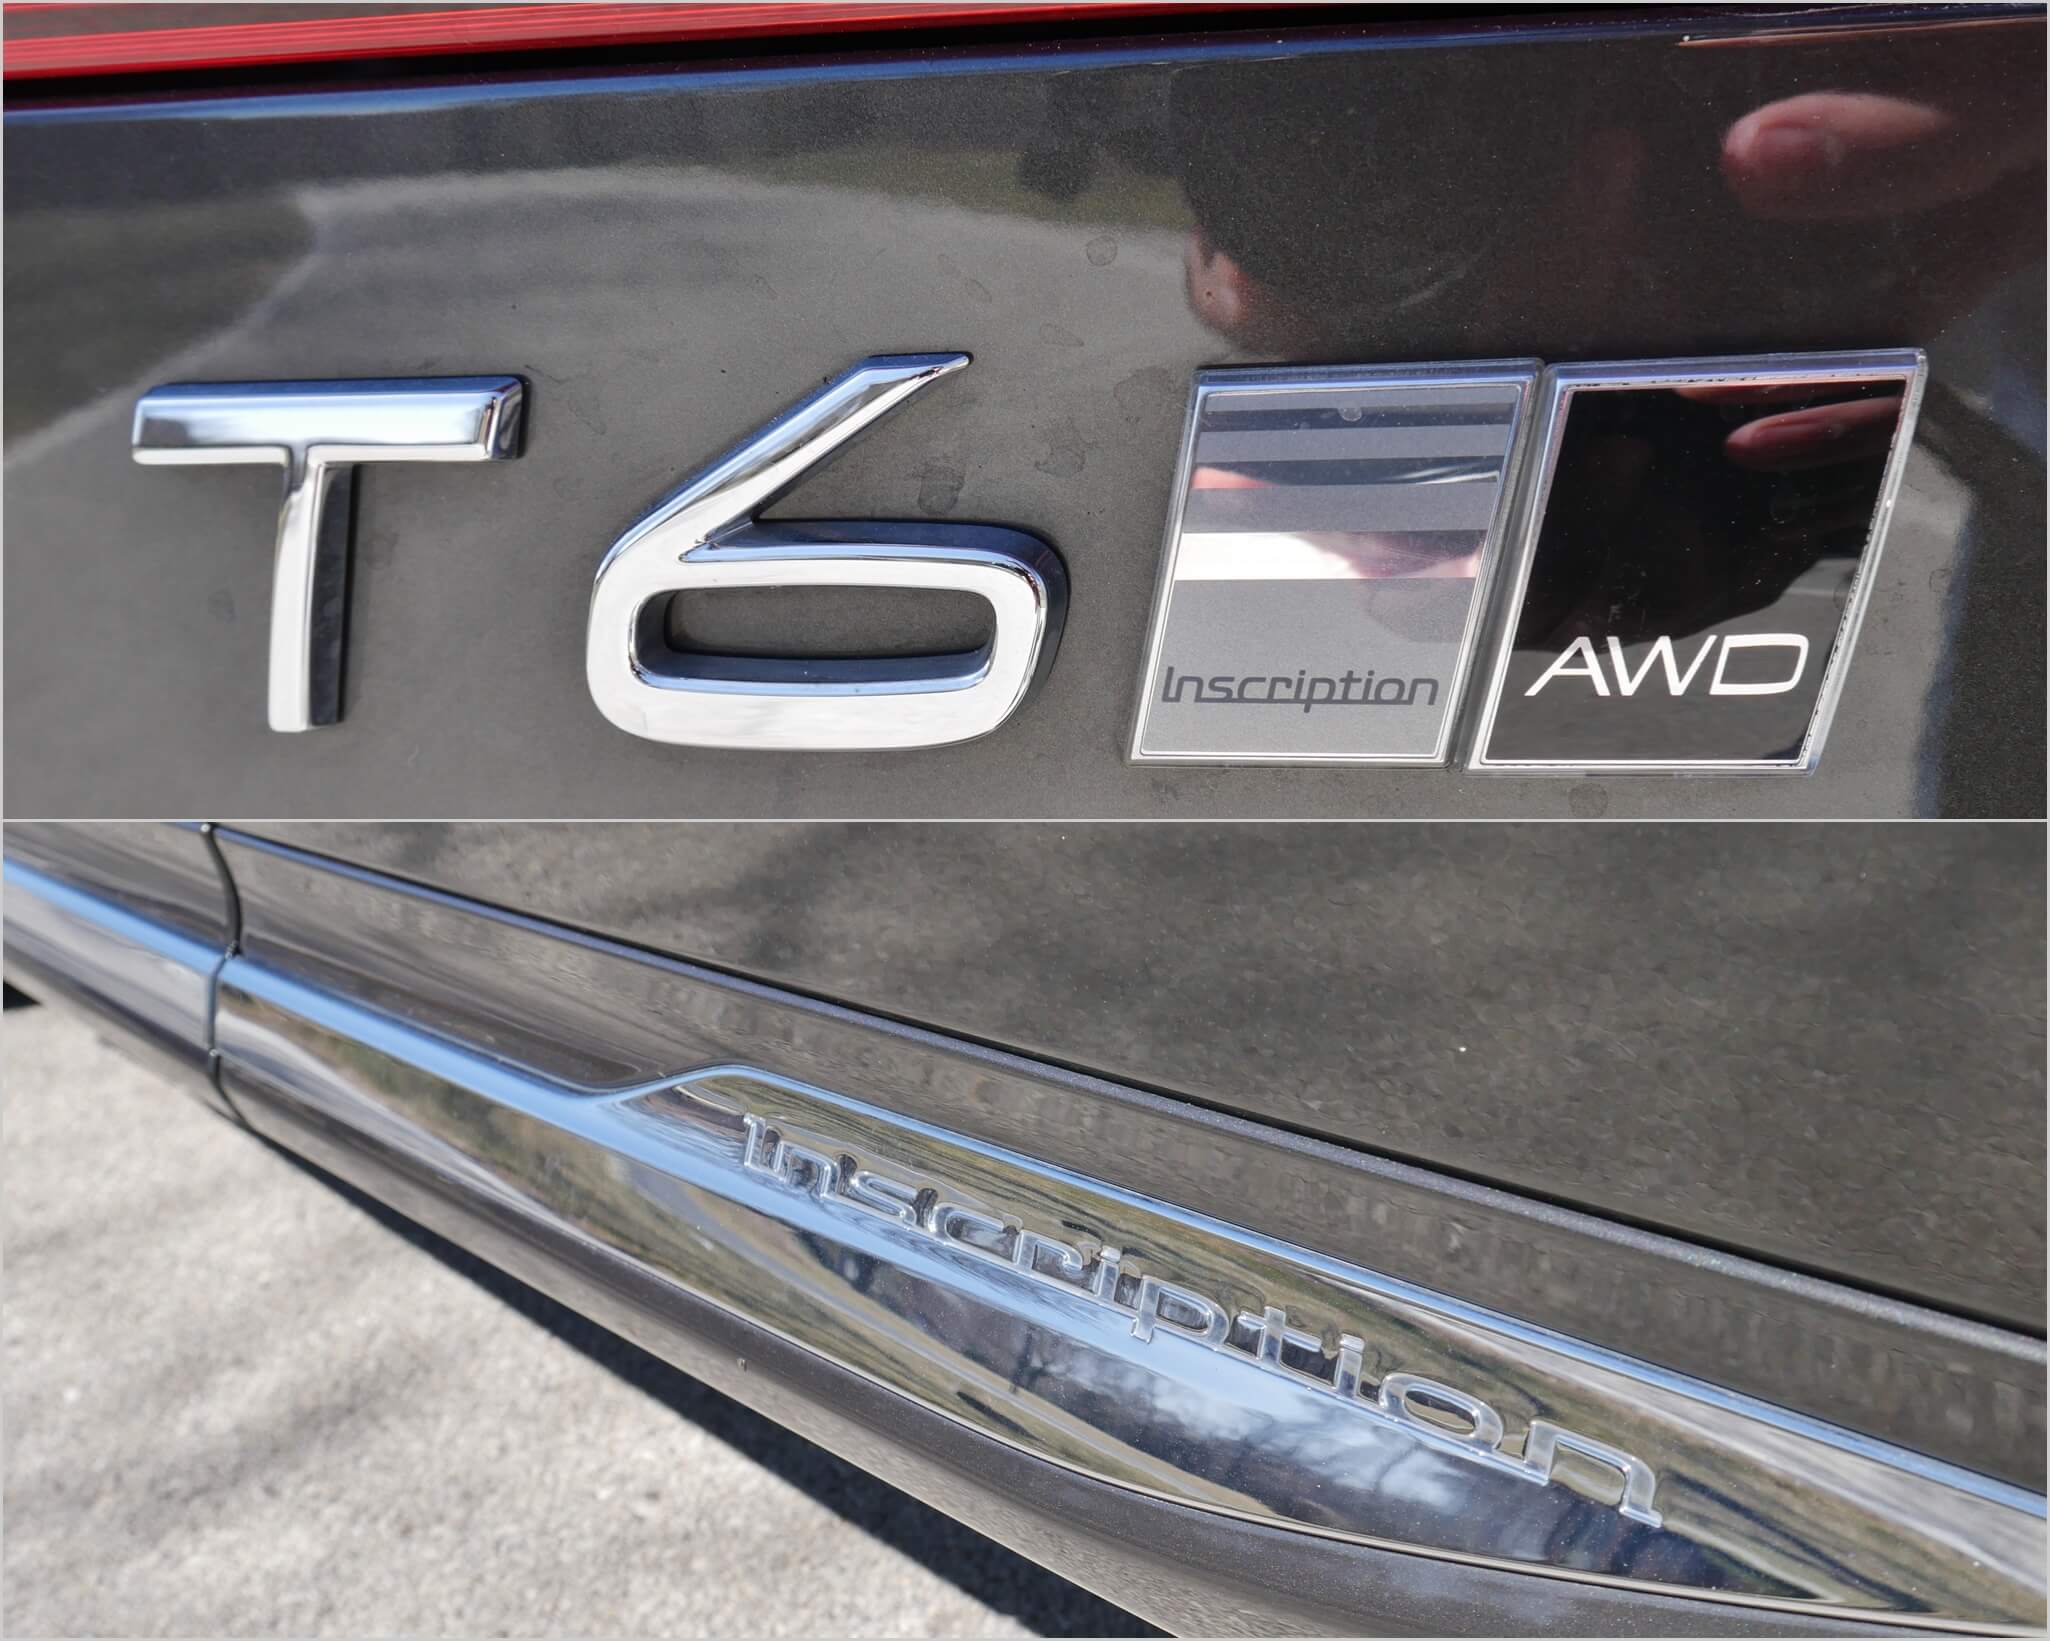 2018 Volvo XC60 T6 AWD Inscription: exterior badging